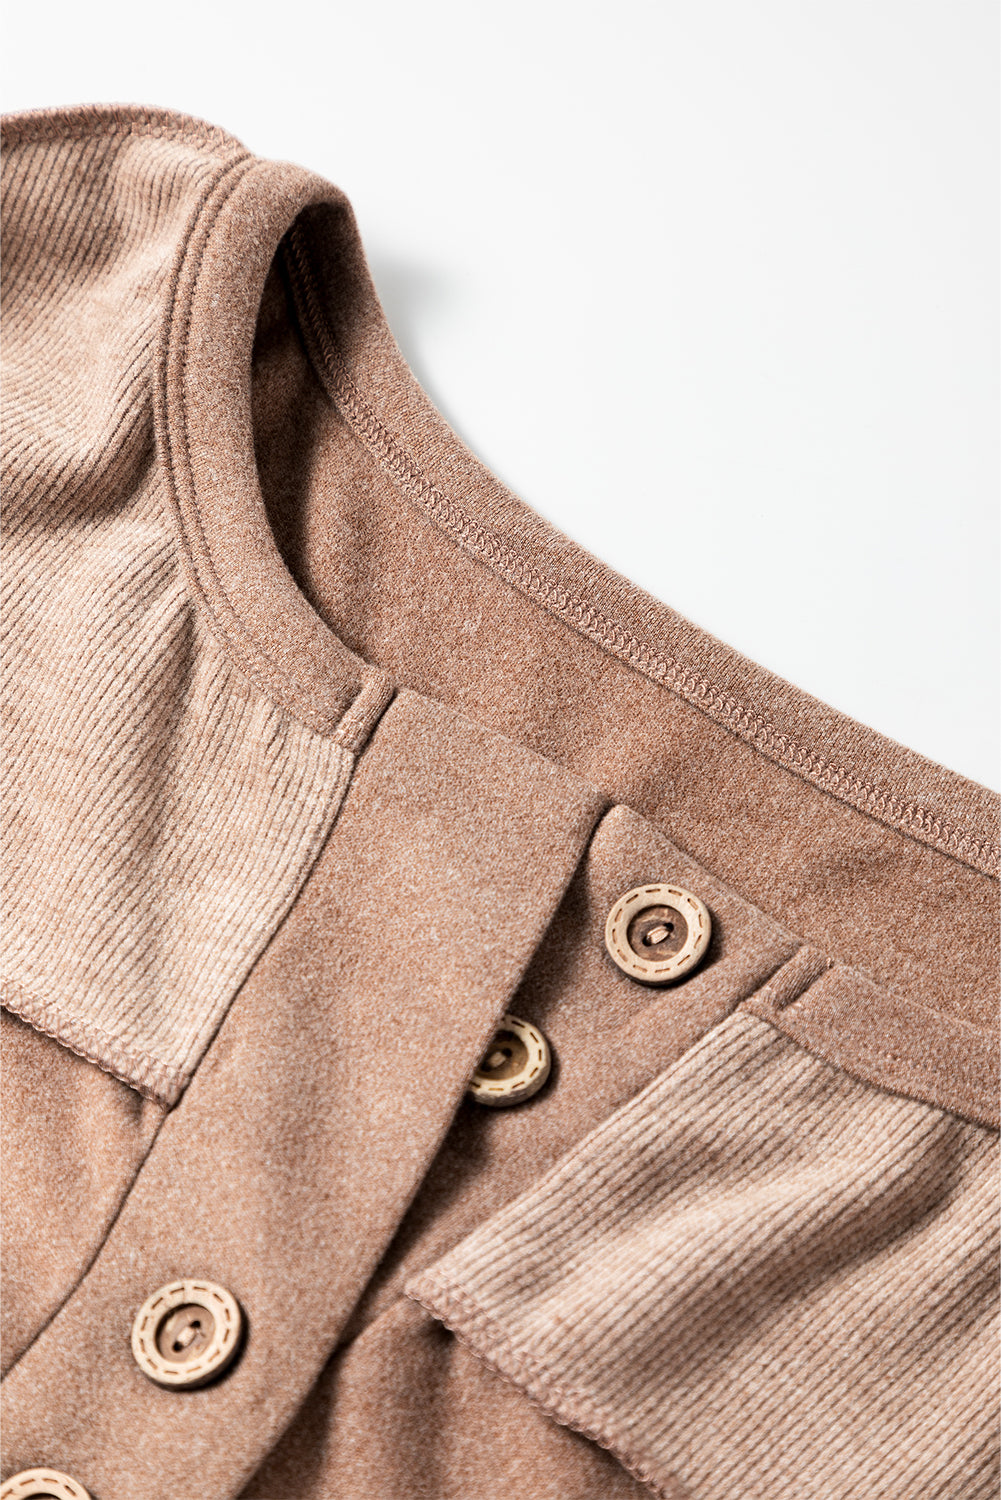 Dark Brown Exposed Seam Ribbed Thumbhole Sleeve Buttoned Sweatshirt